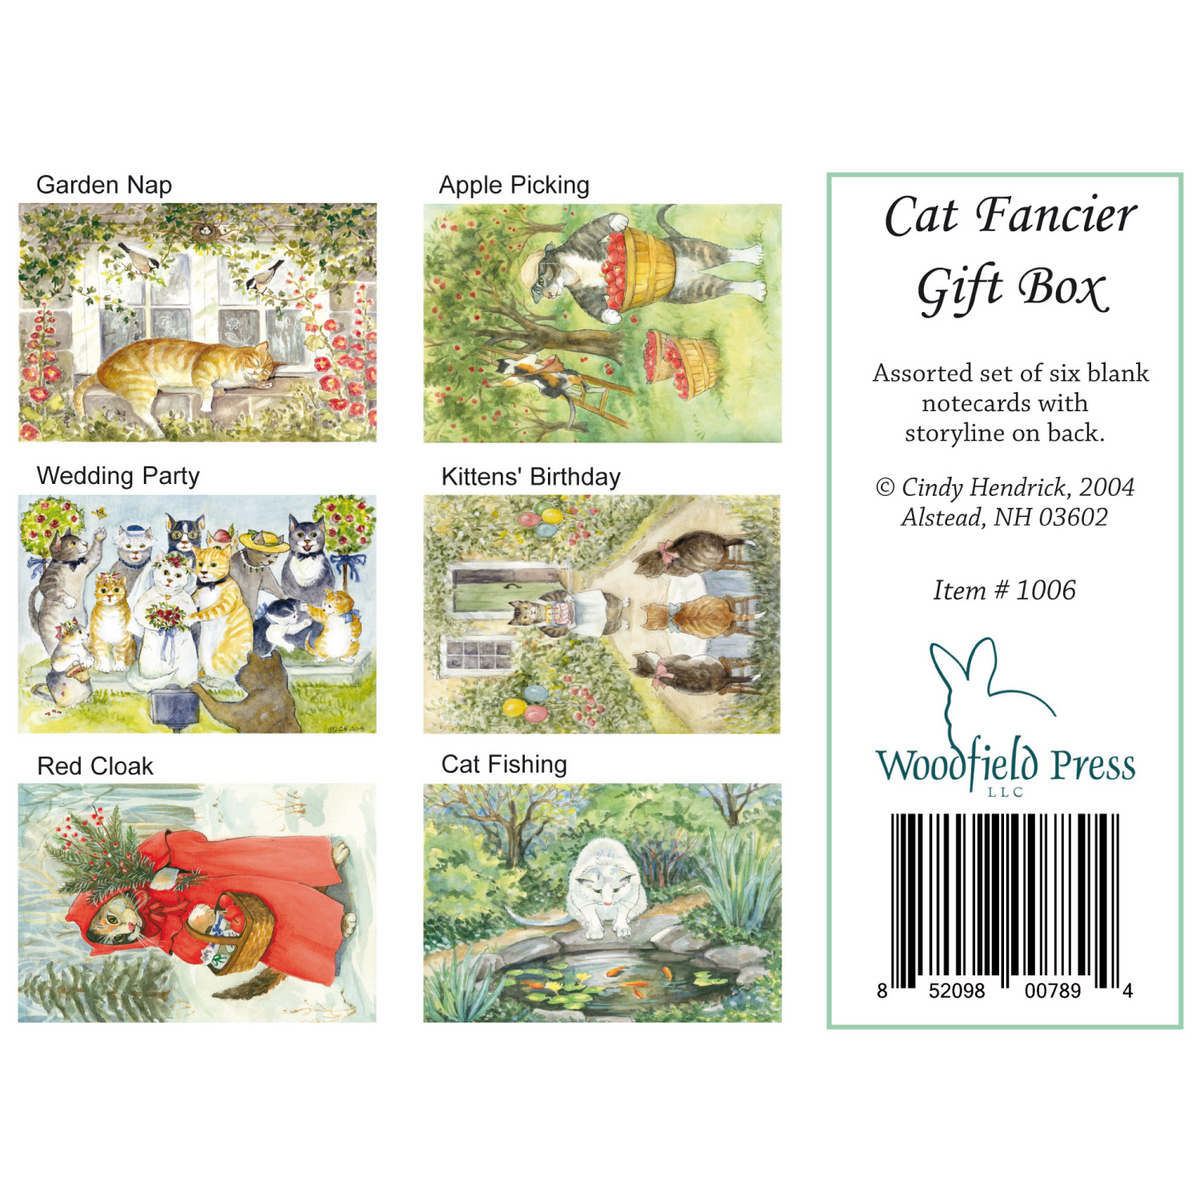 Item 1006 Cat Fancier Notecard Assortment with six different images